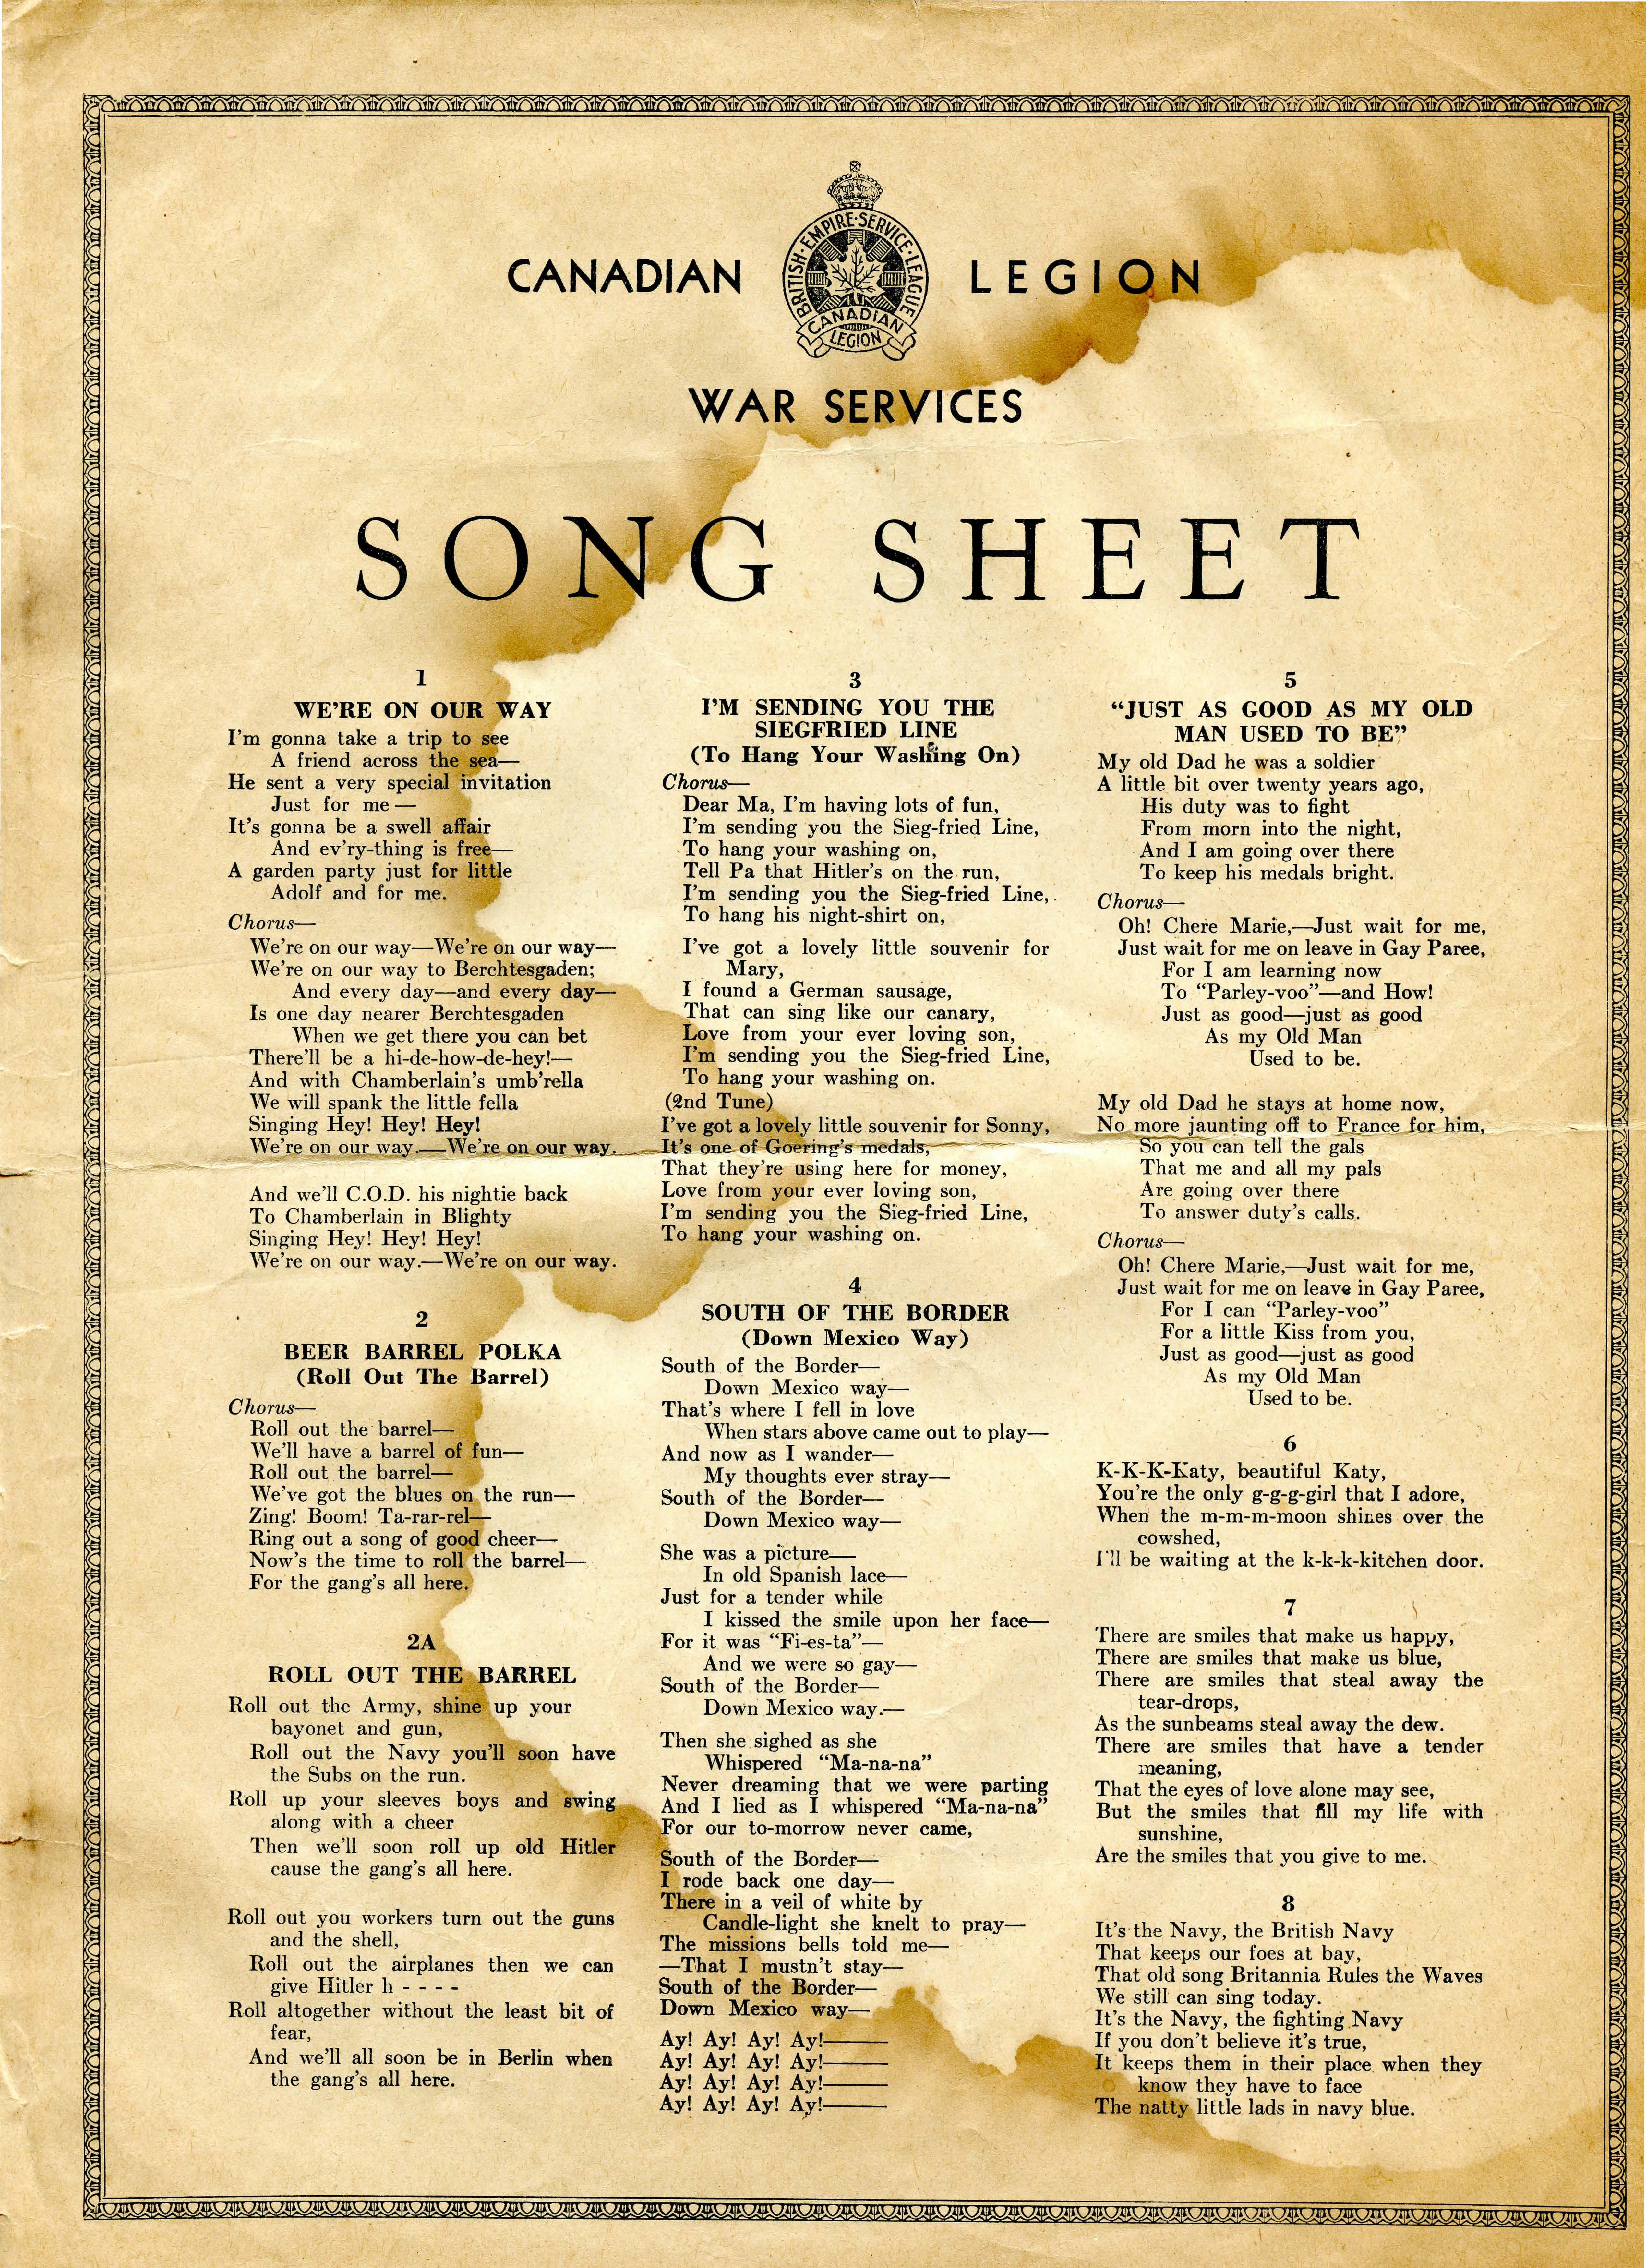 Canadian Legion Song Sheet undated